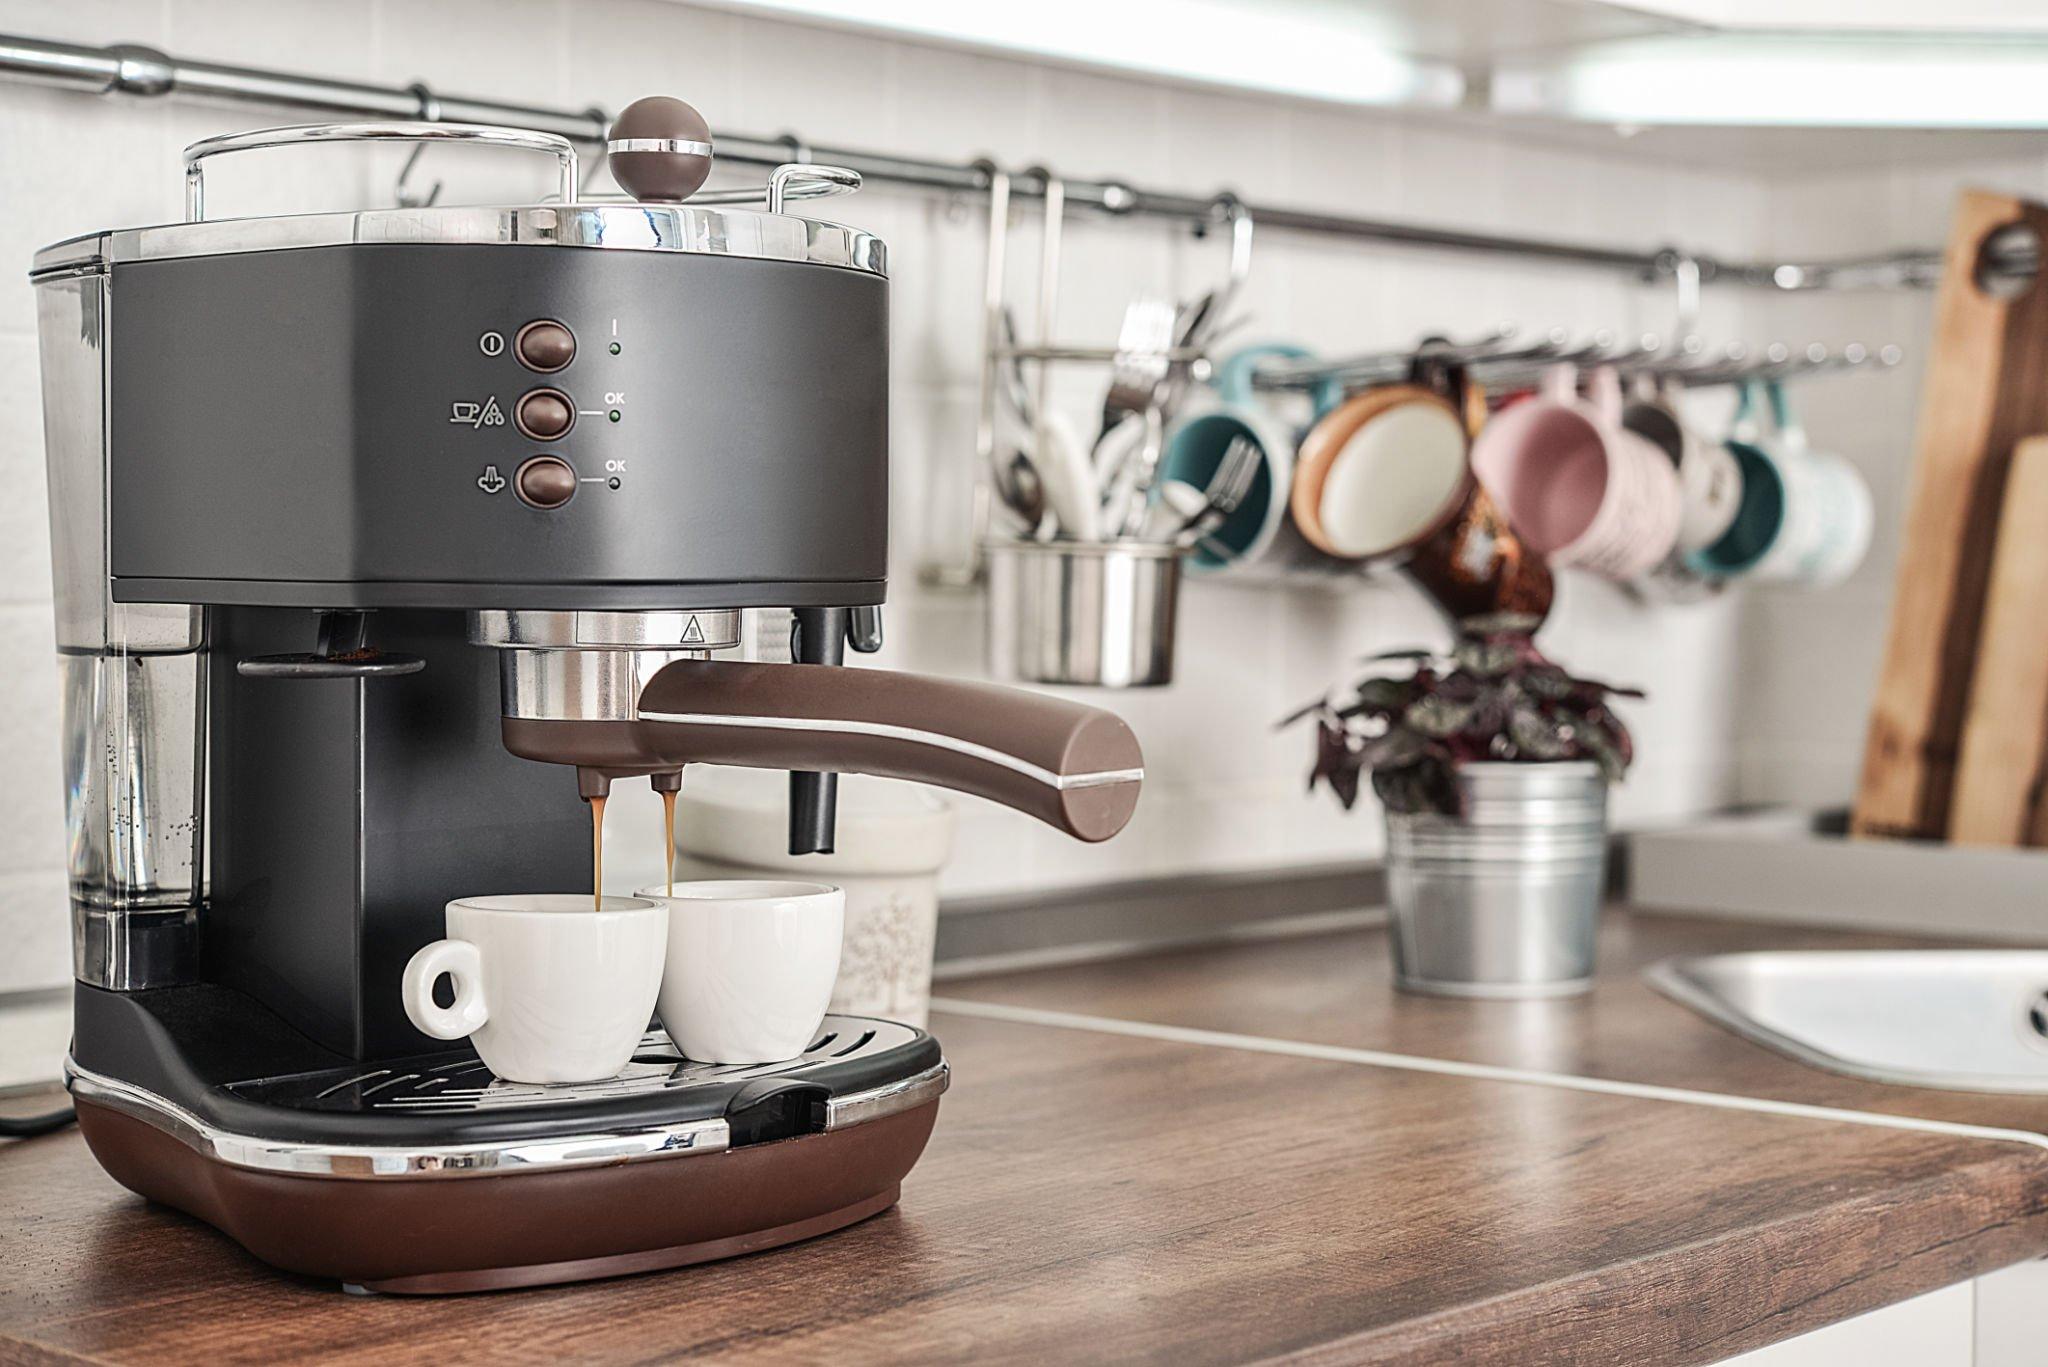 Can You Make Espresso With a Regular Coffee Maker?